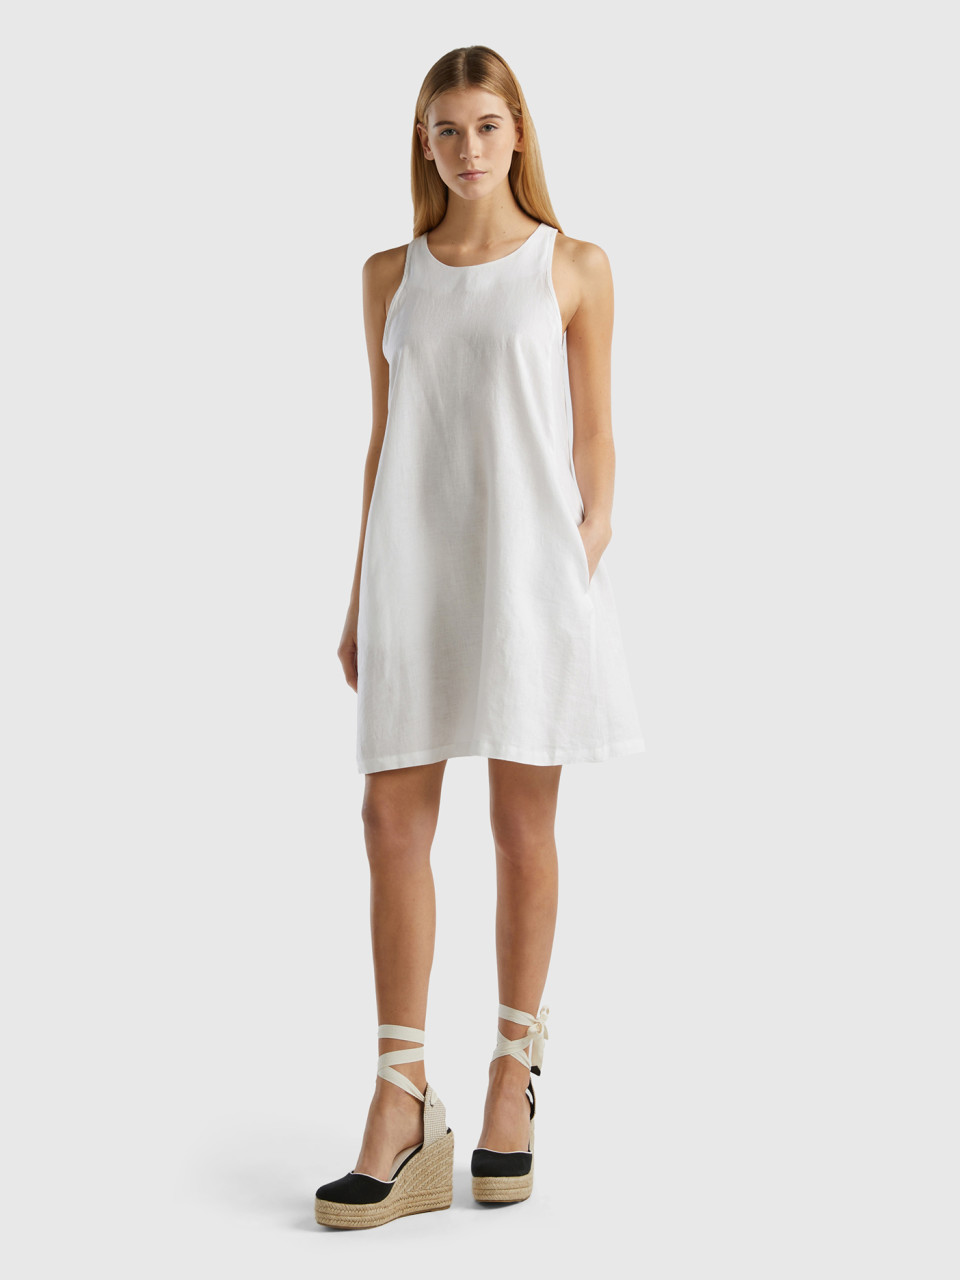 Benetton, Sleeveless Dress In Pure Linen, White, Women